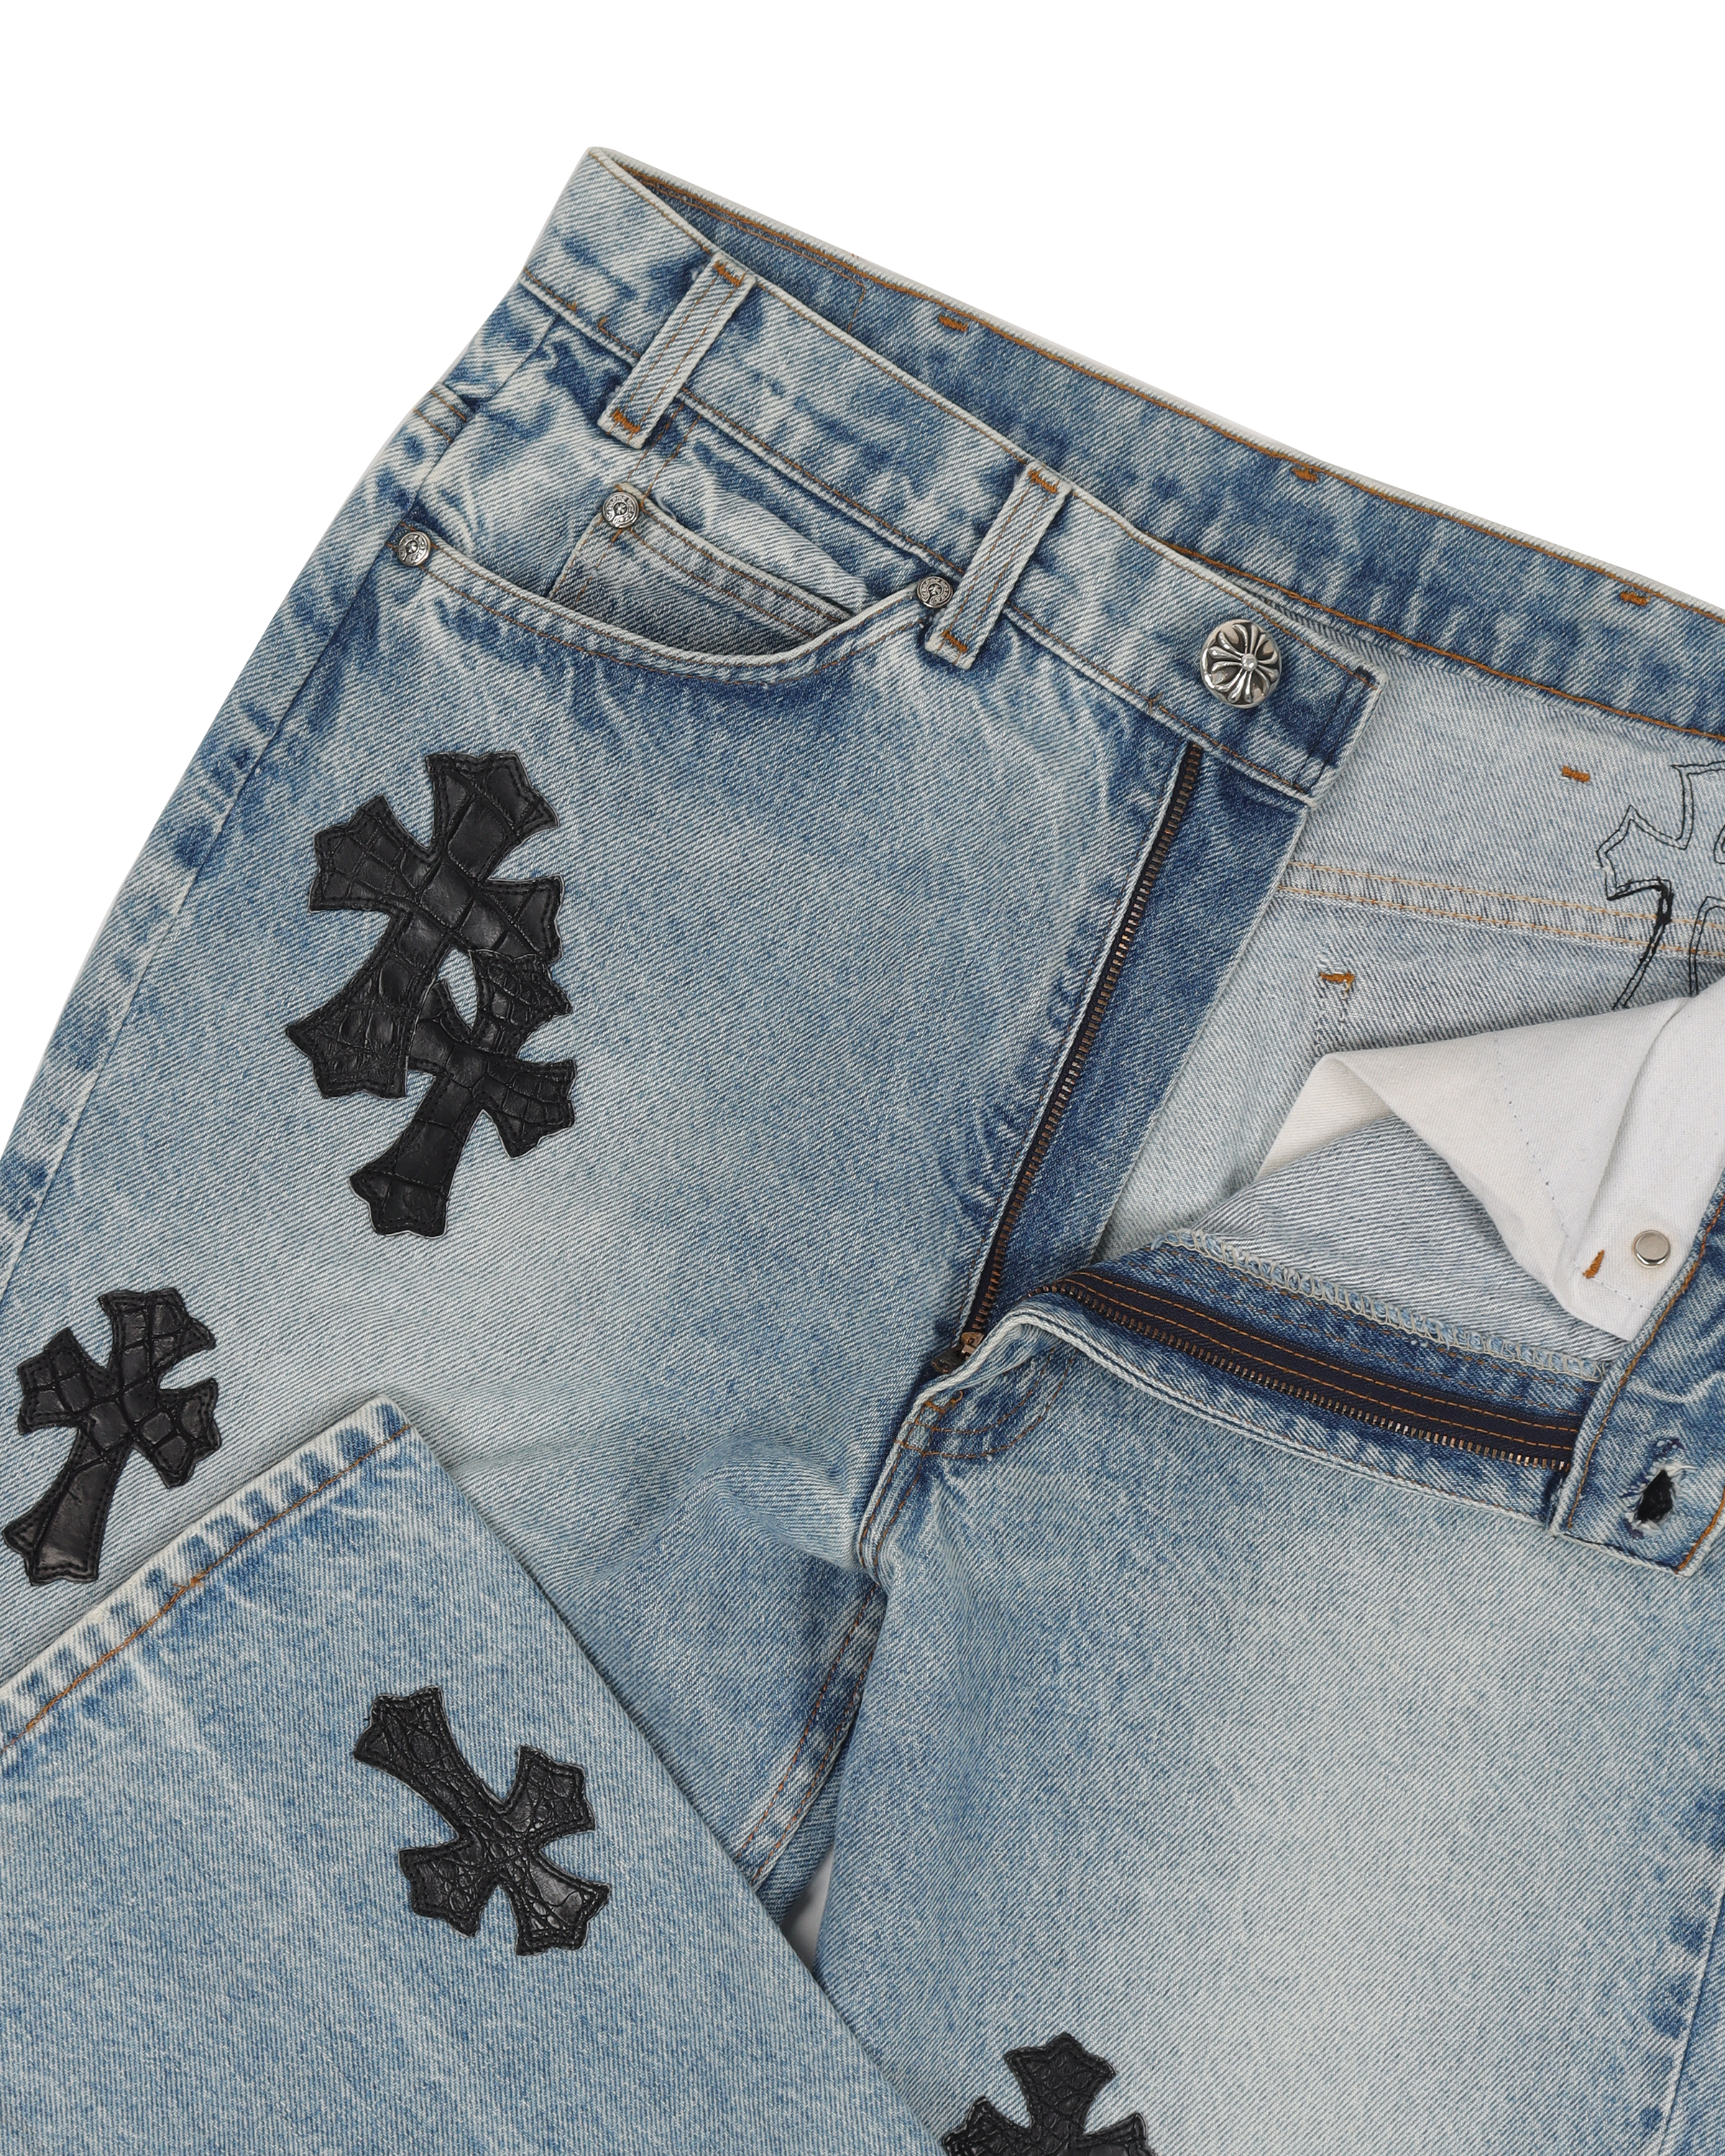 Chrome Hearts Jeans Levi's Alligator Black Cross Patch Denim